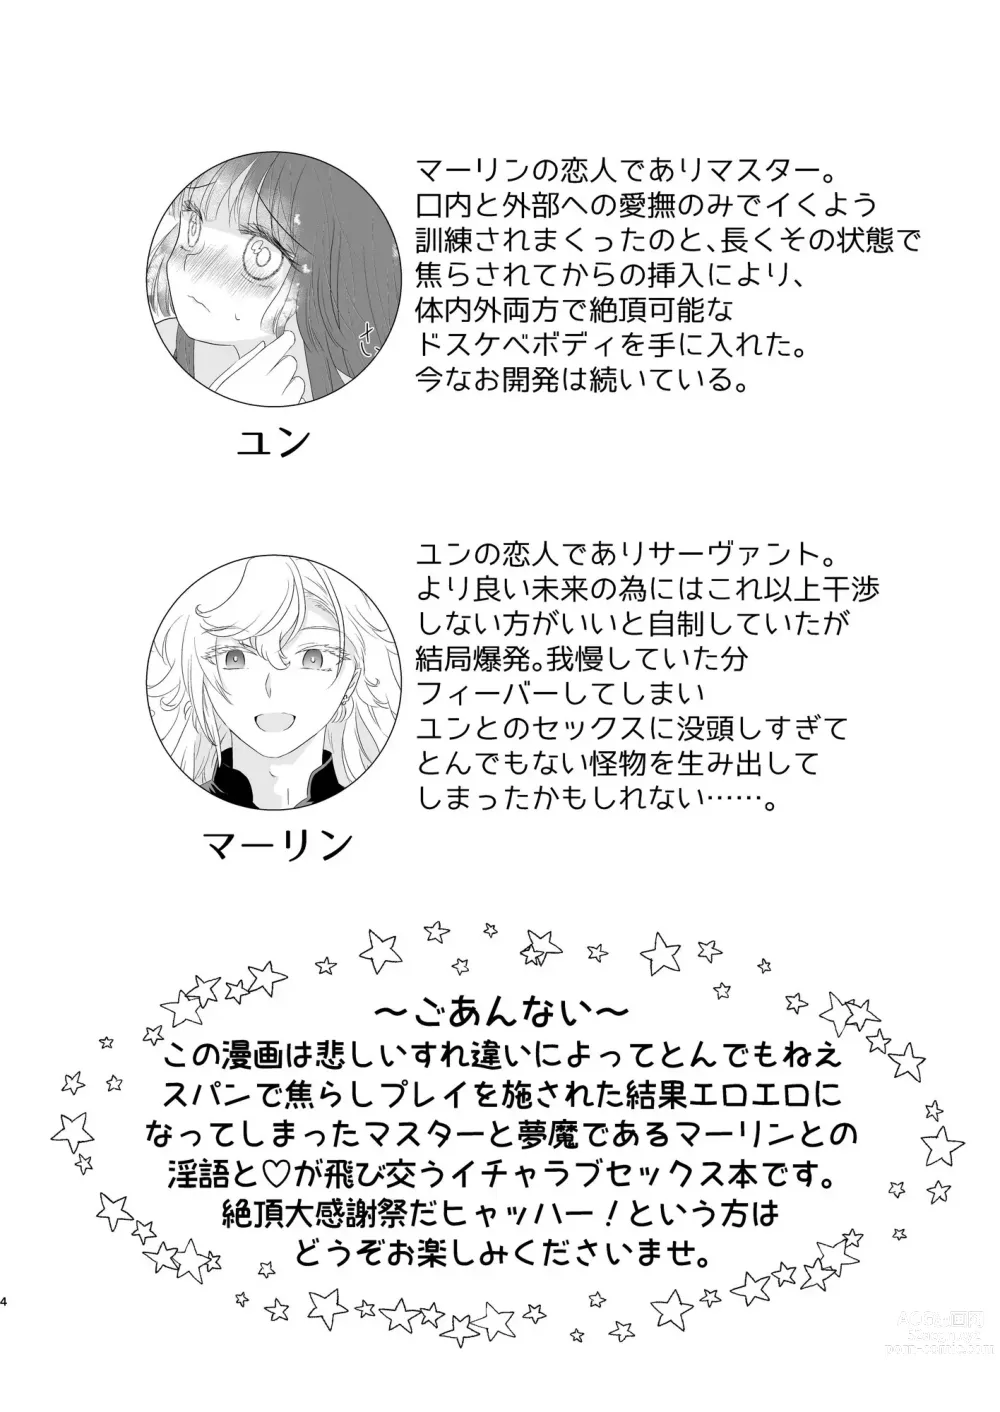 Page 4 of doujinshi 5/ 28 Inte yume dōraku 6] R 18 mārin yumemanga sanpuru【 [ fate grand order )